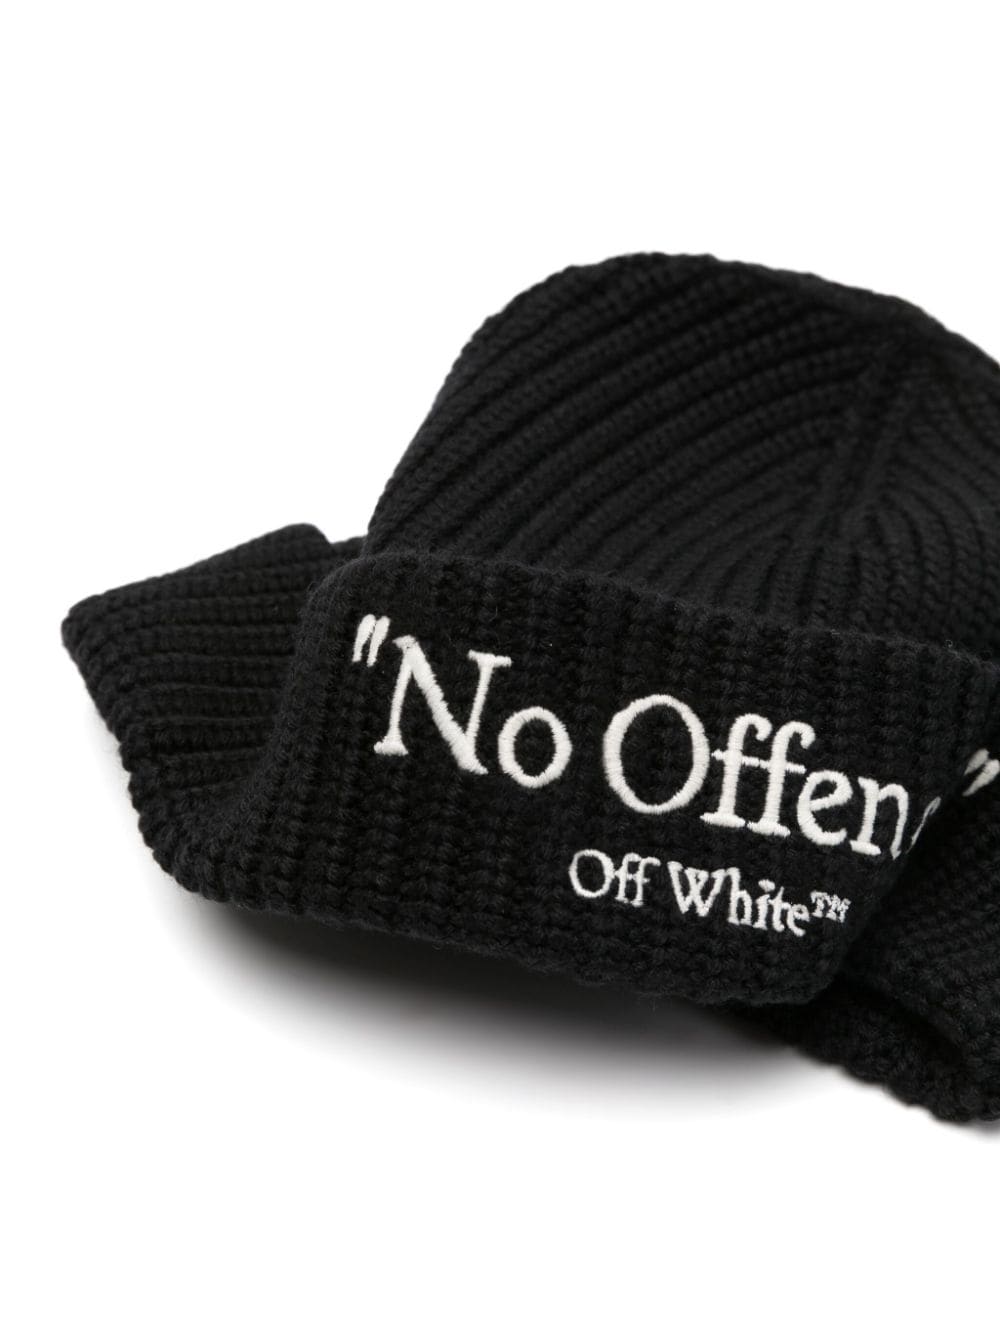 Off White Hats Black